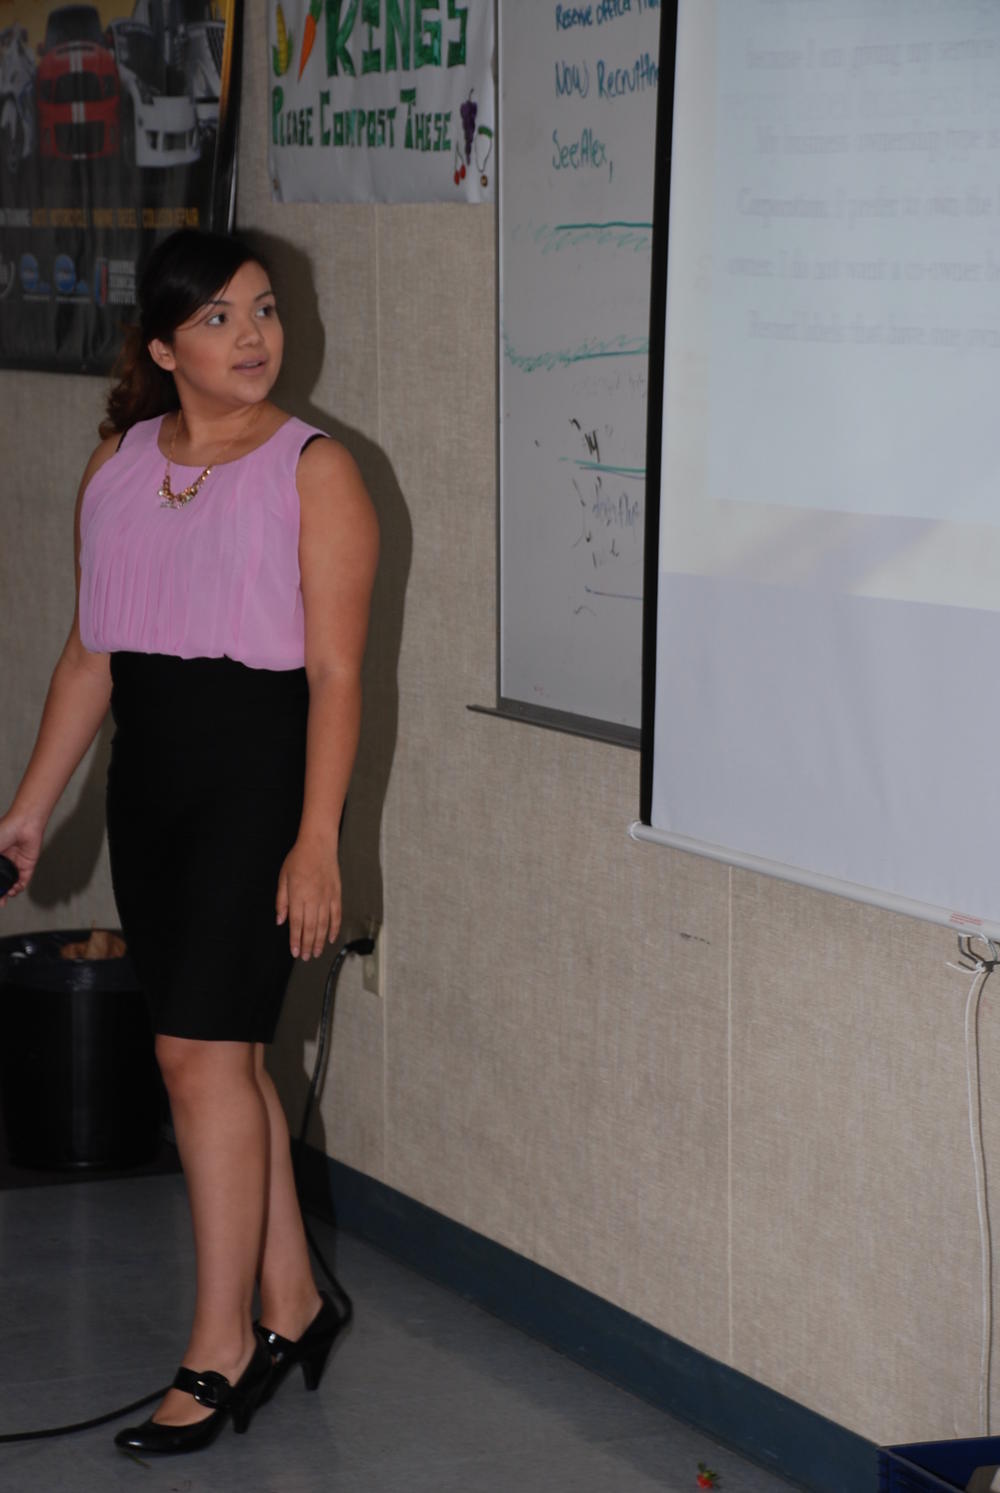 A woman giving a presentation